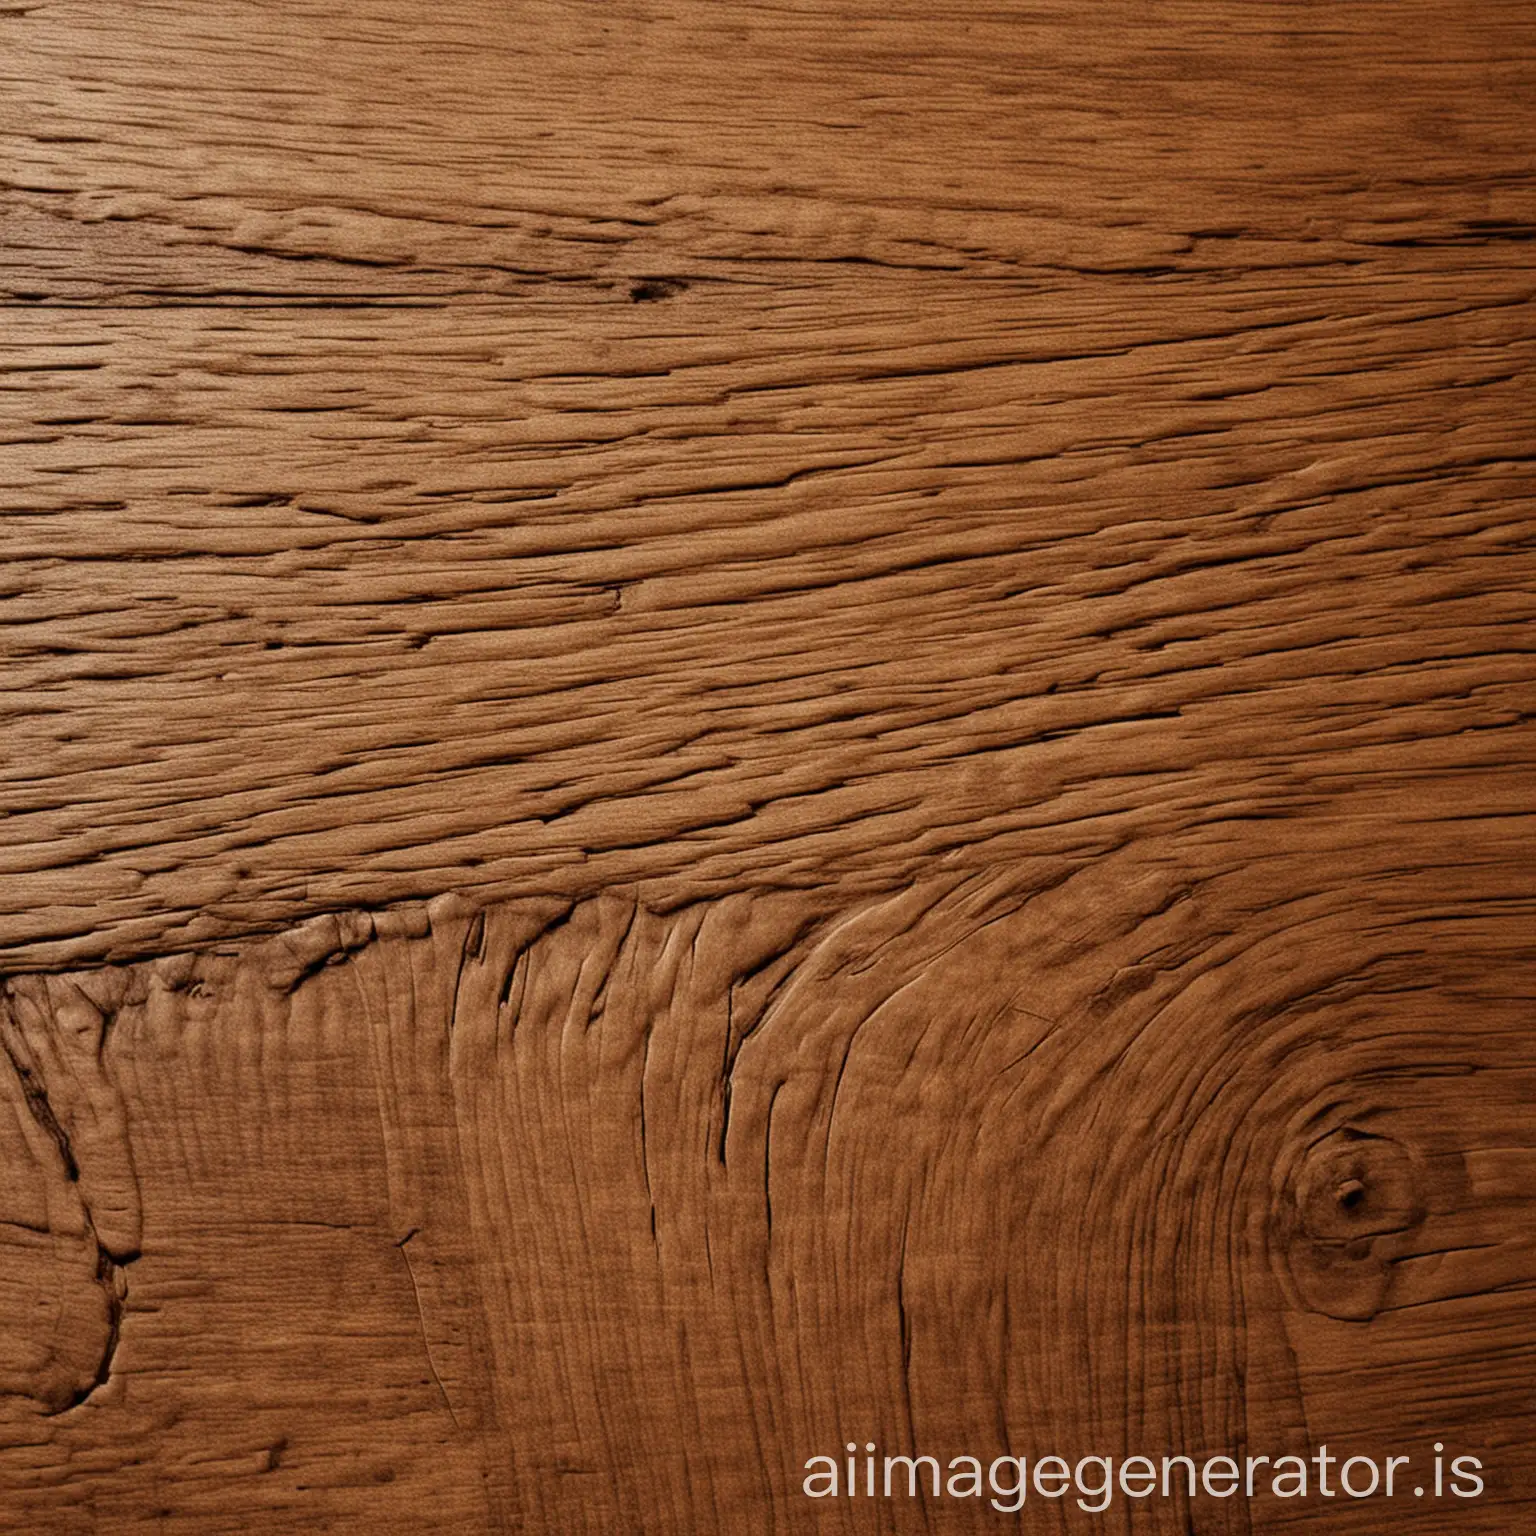 Create a cool realistic wood image